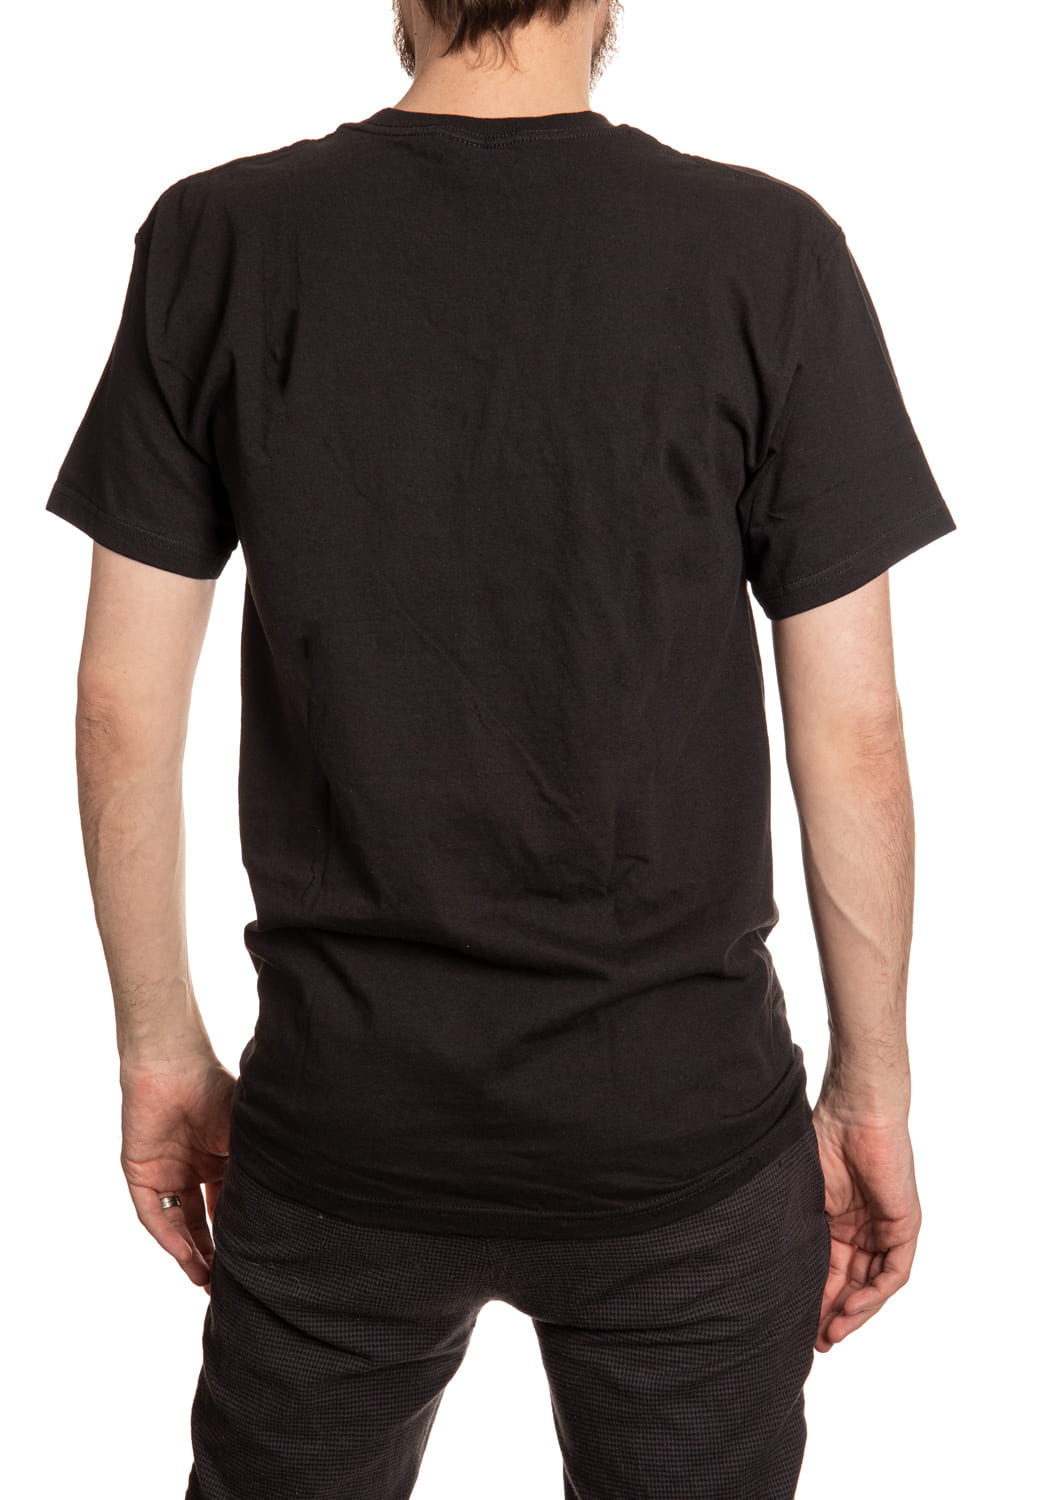 Carling Black Label Black T-Shirt Back View. No Back Print